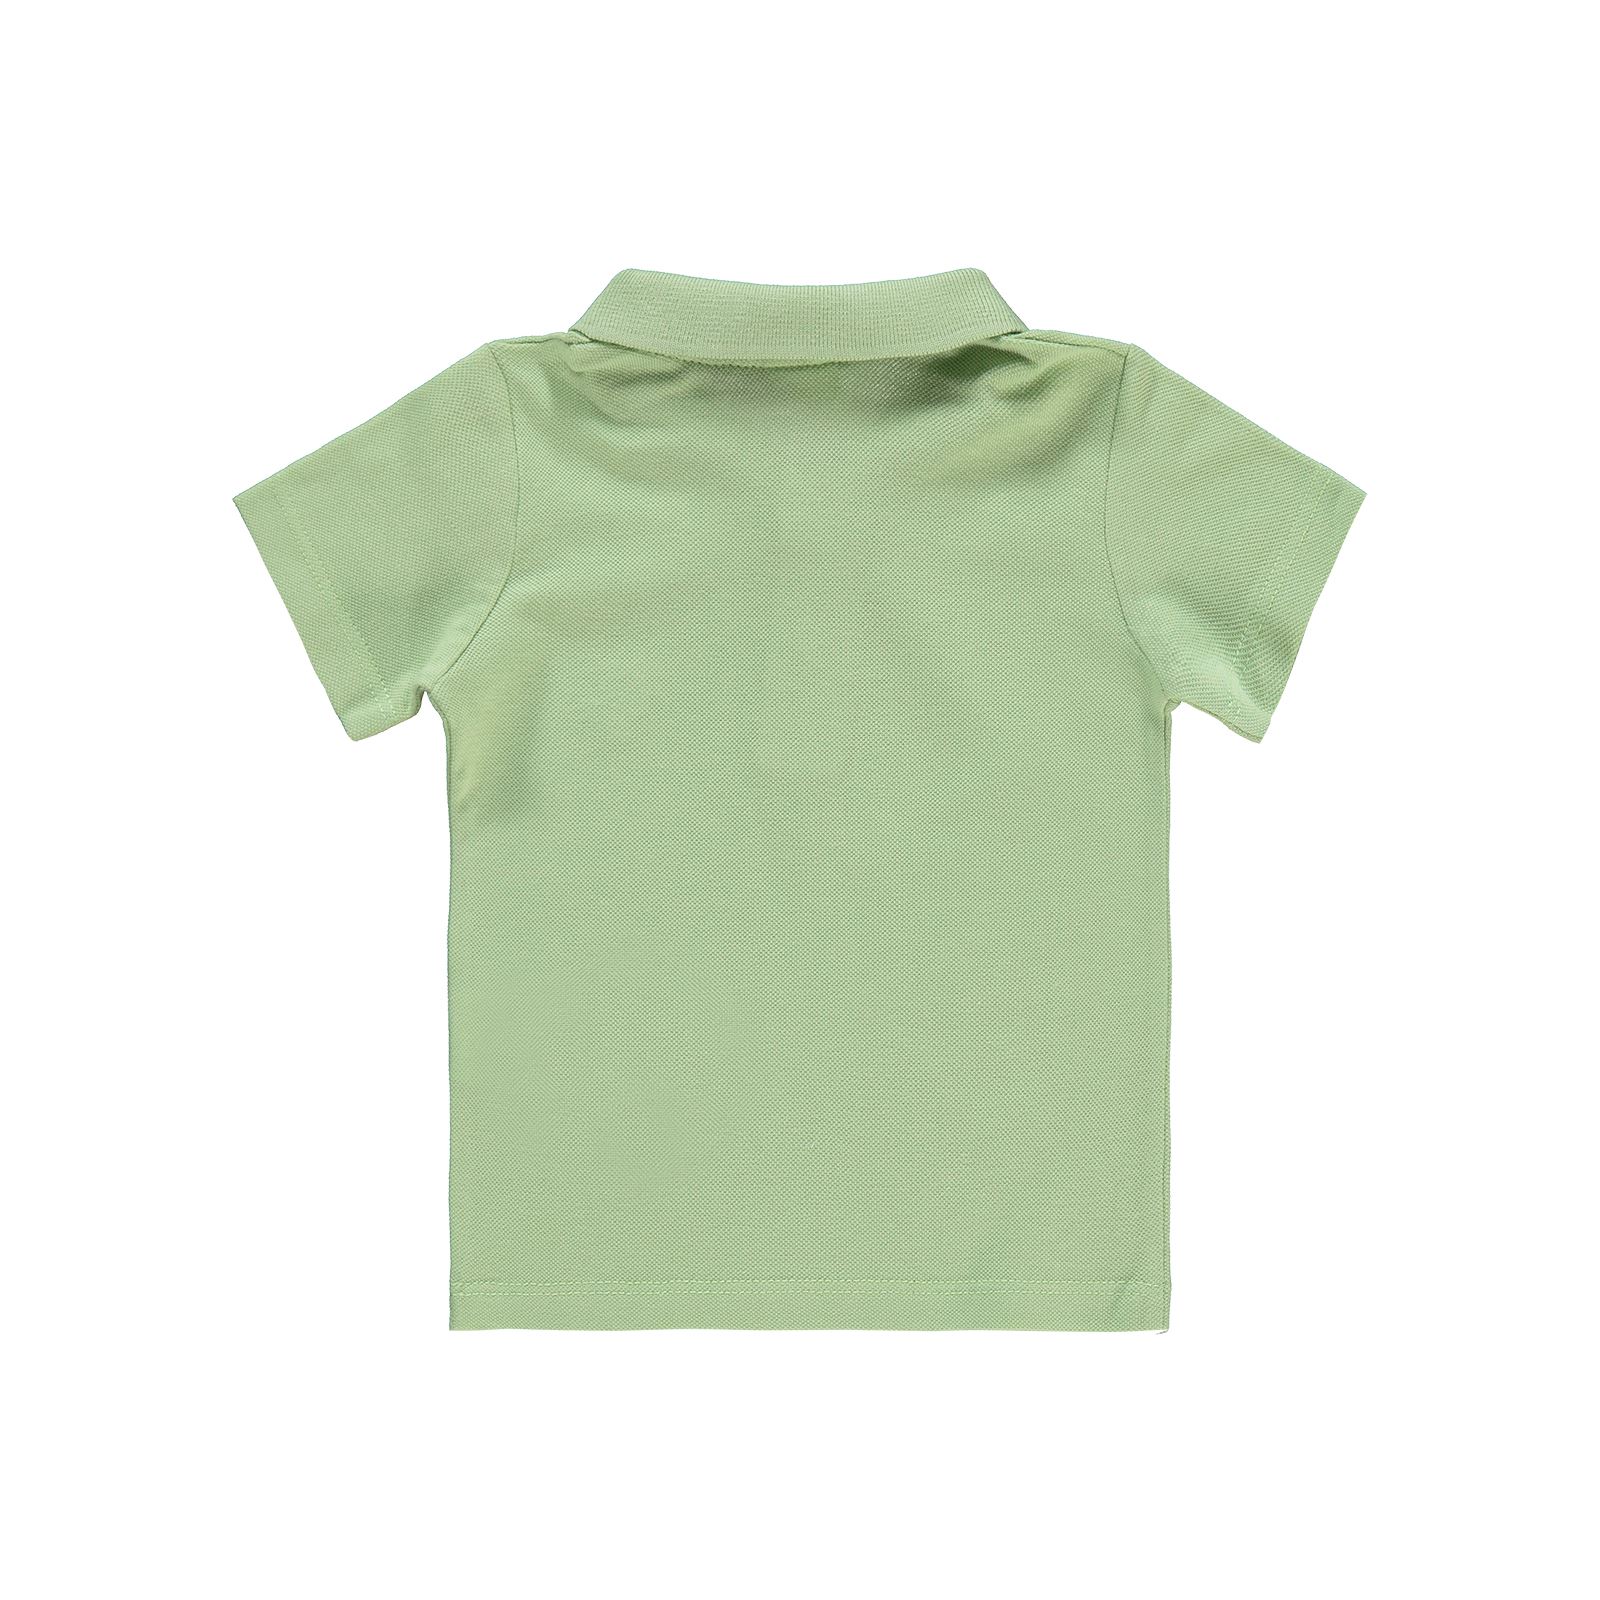 Civil Baby Erkek Bebek Tişört 6-18 Ay Soft Yeşil